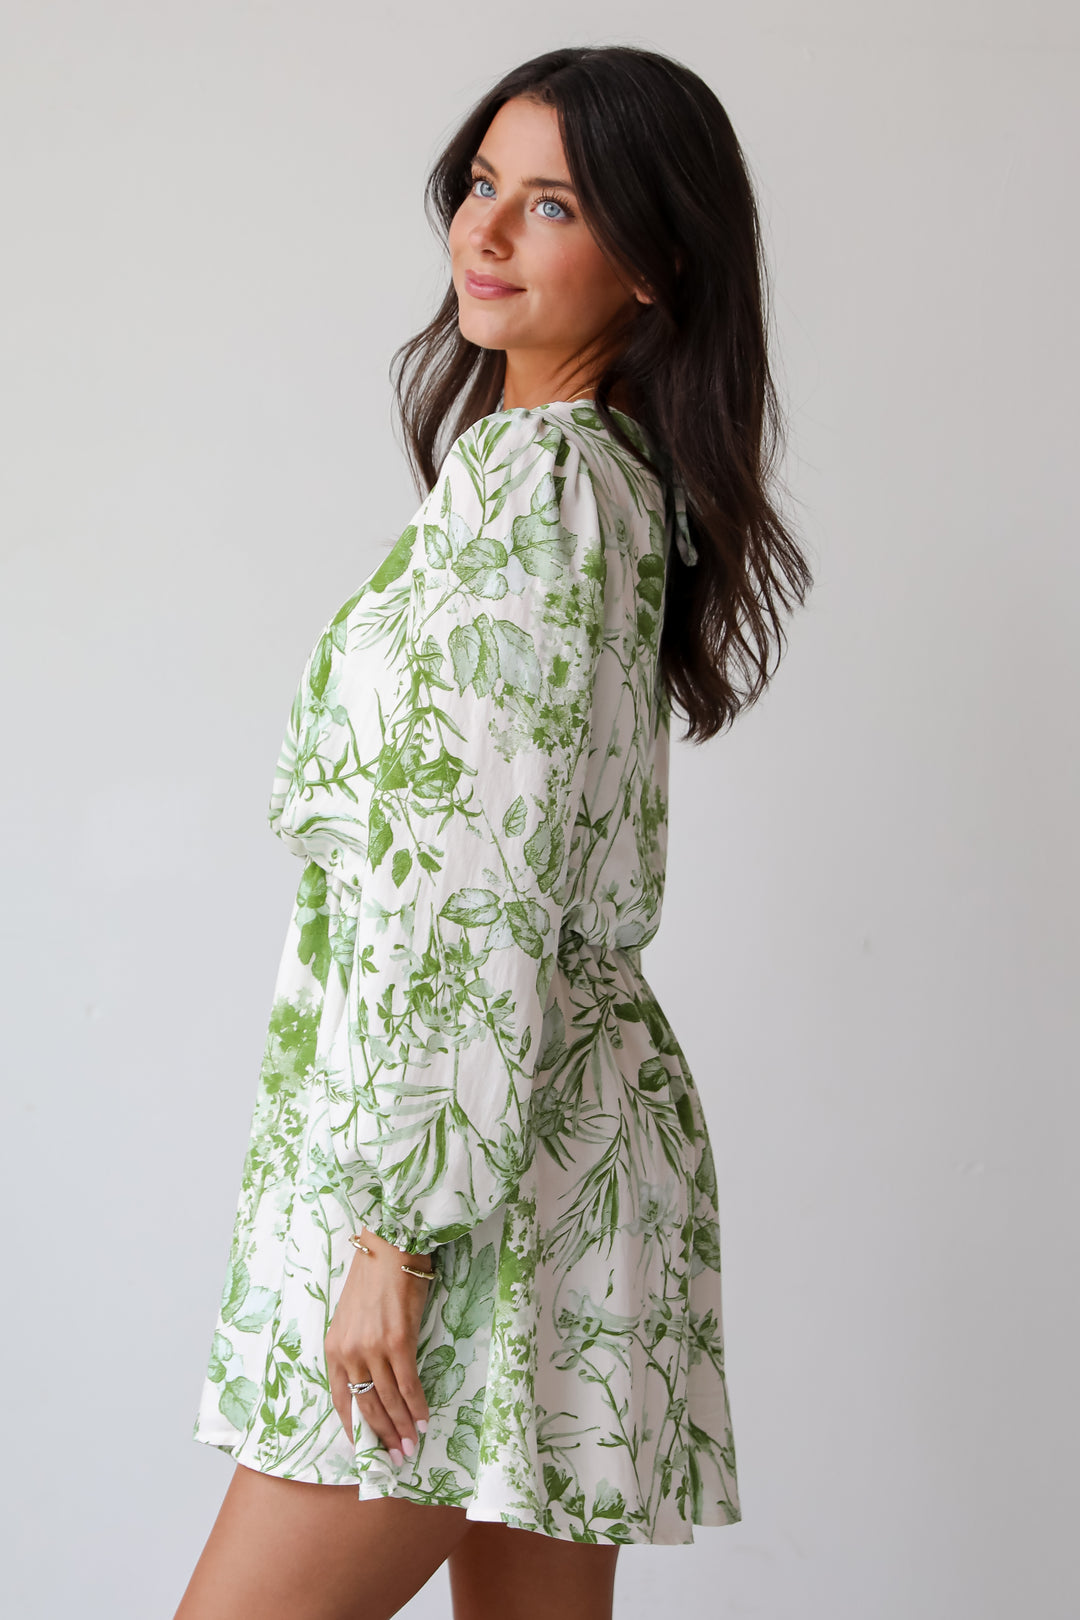 Mesmerizing Essence Green Floral Mini Dress